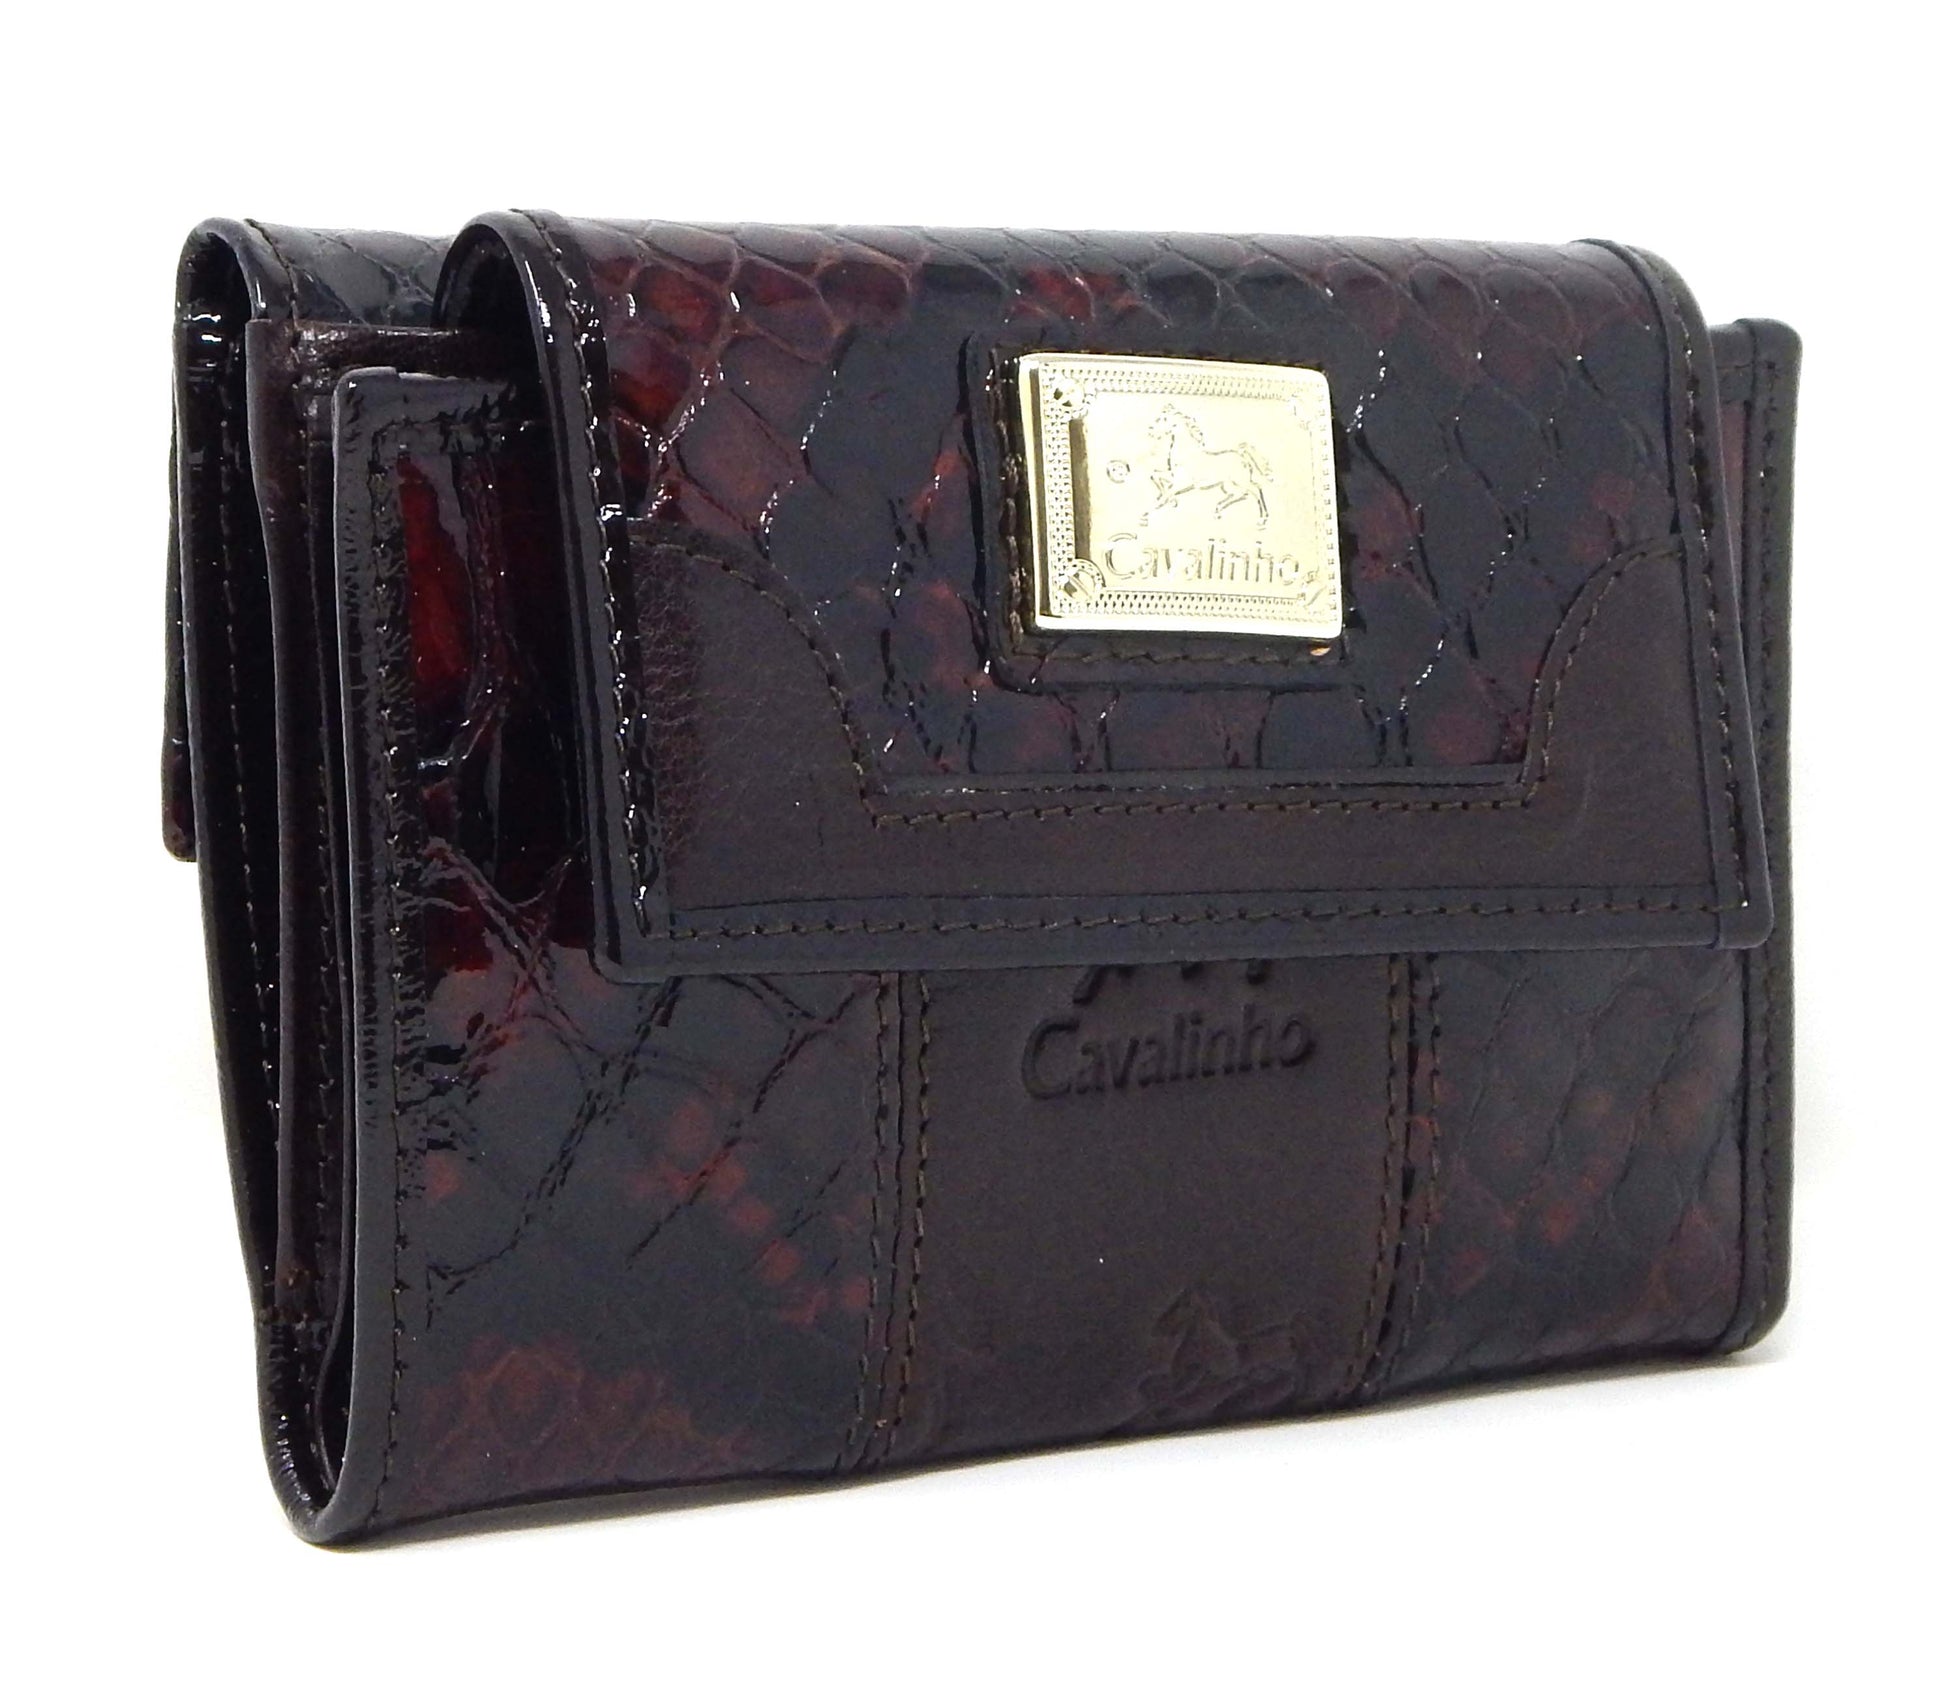 Cavalinho Honor Leather Wallet - Brown - 28190219.02.99_2